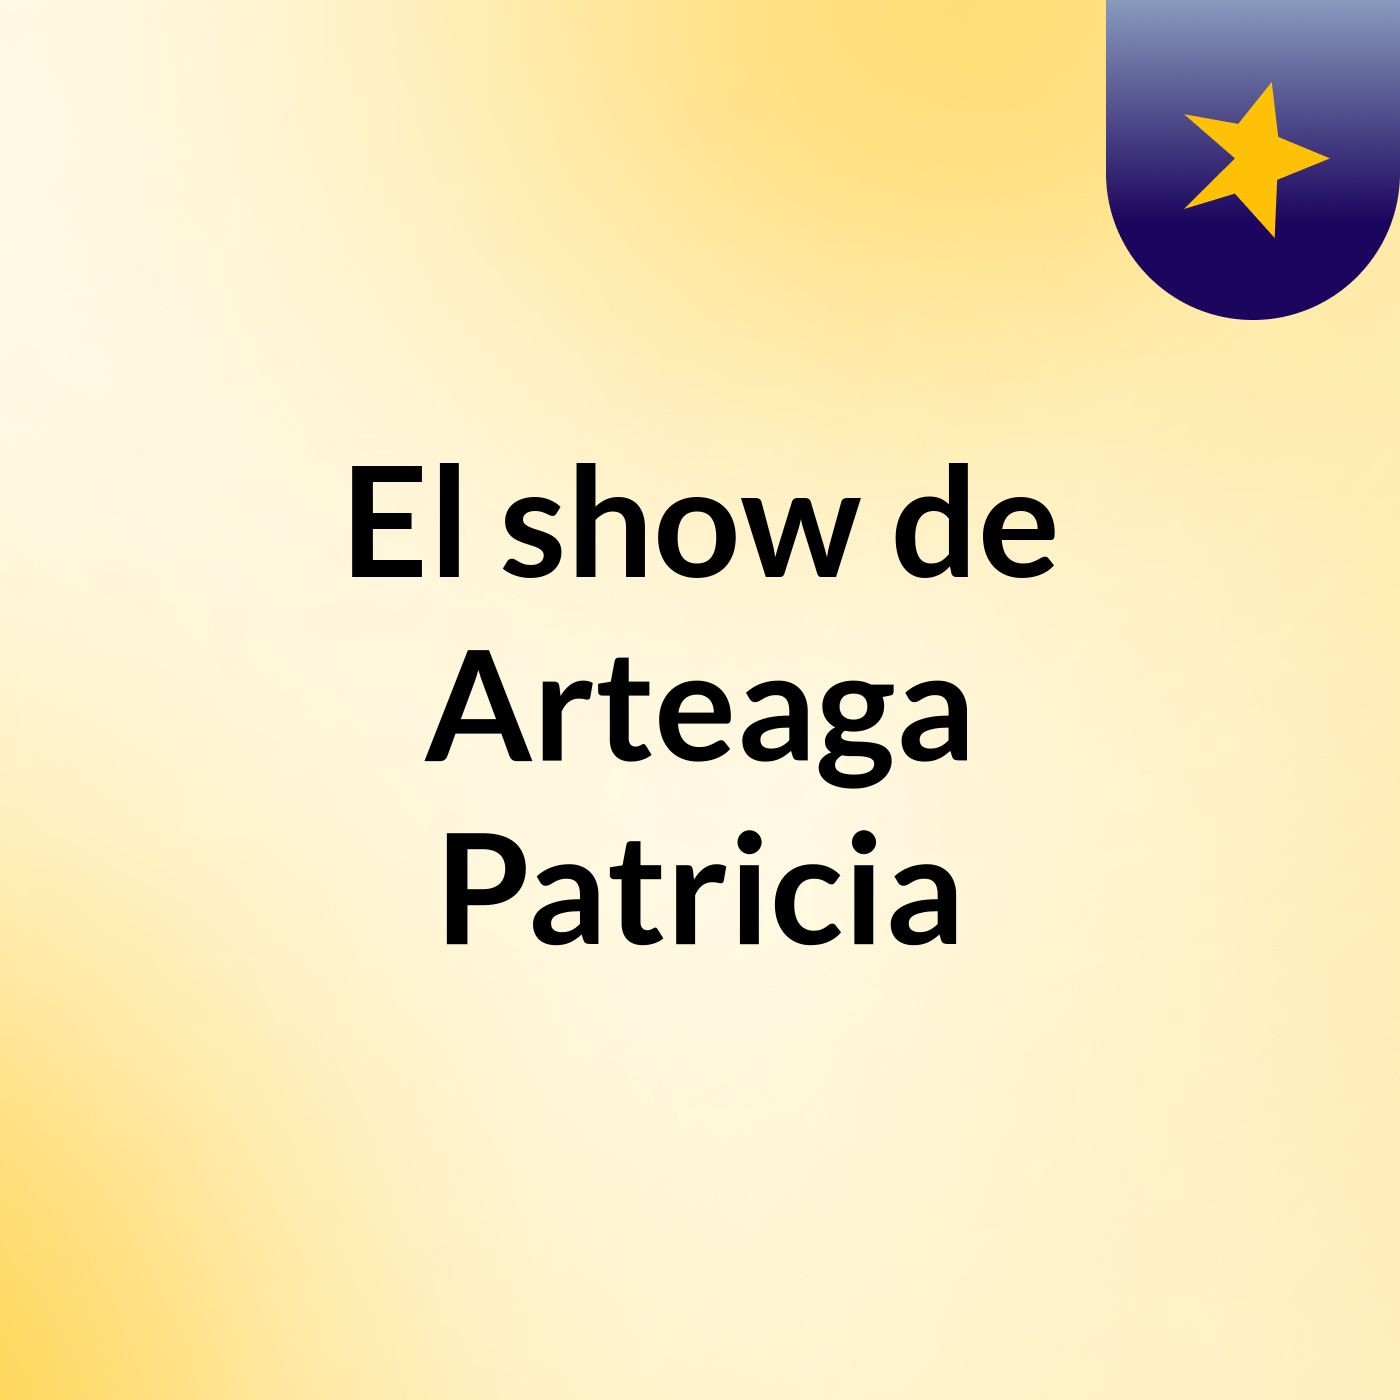 El show de Arteaga Patricia